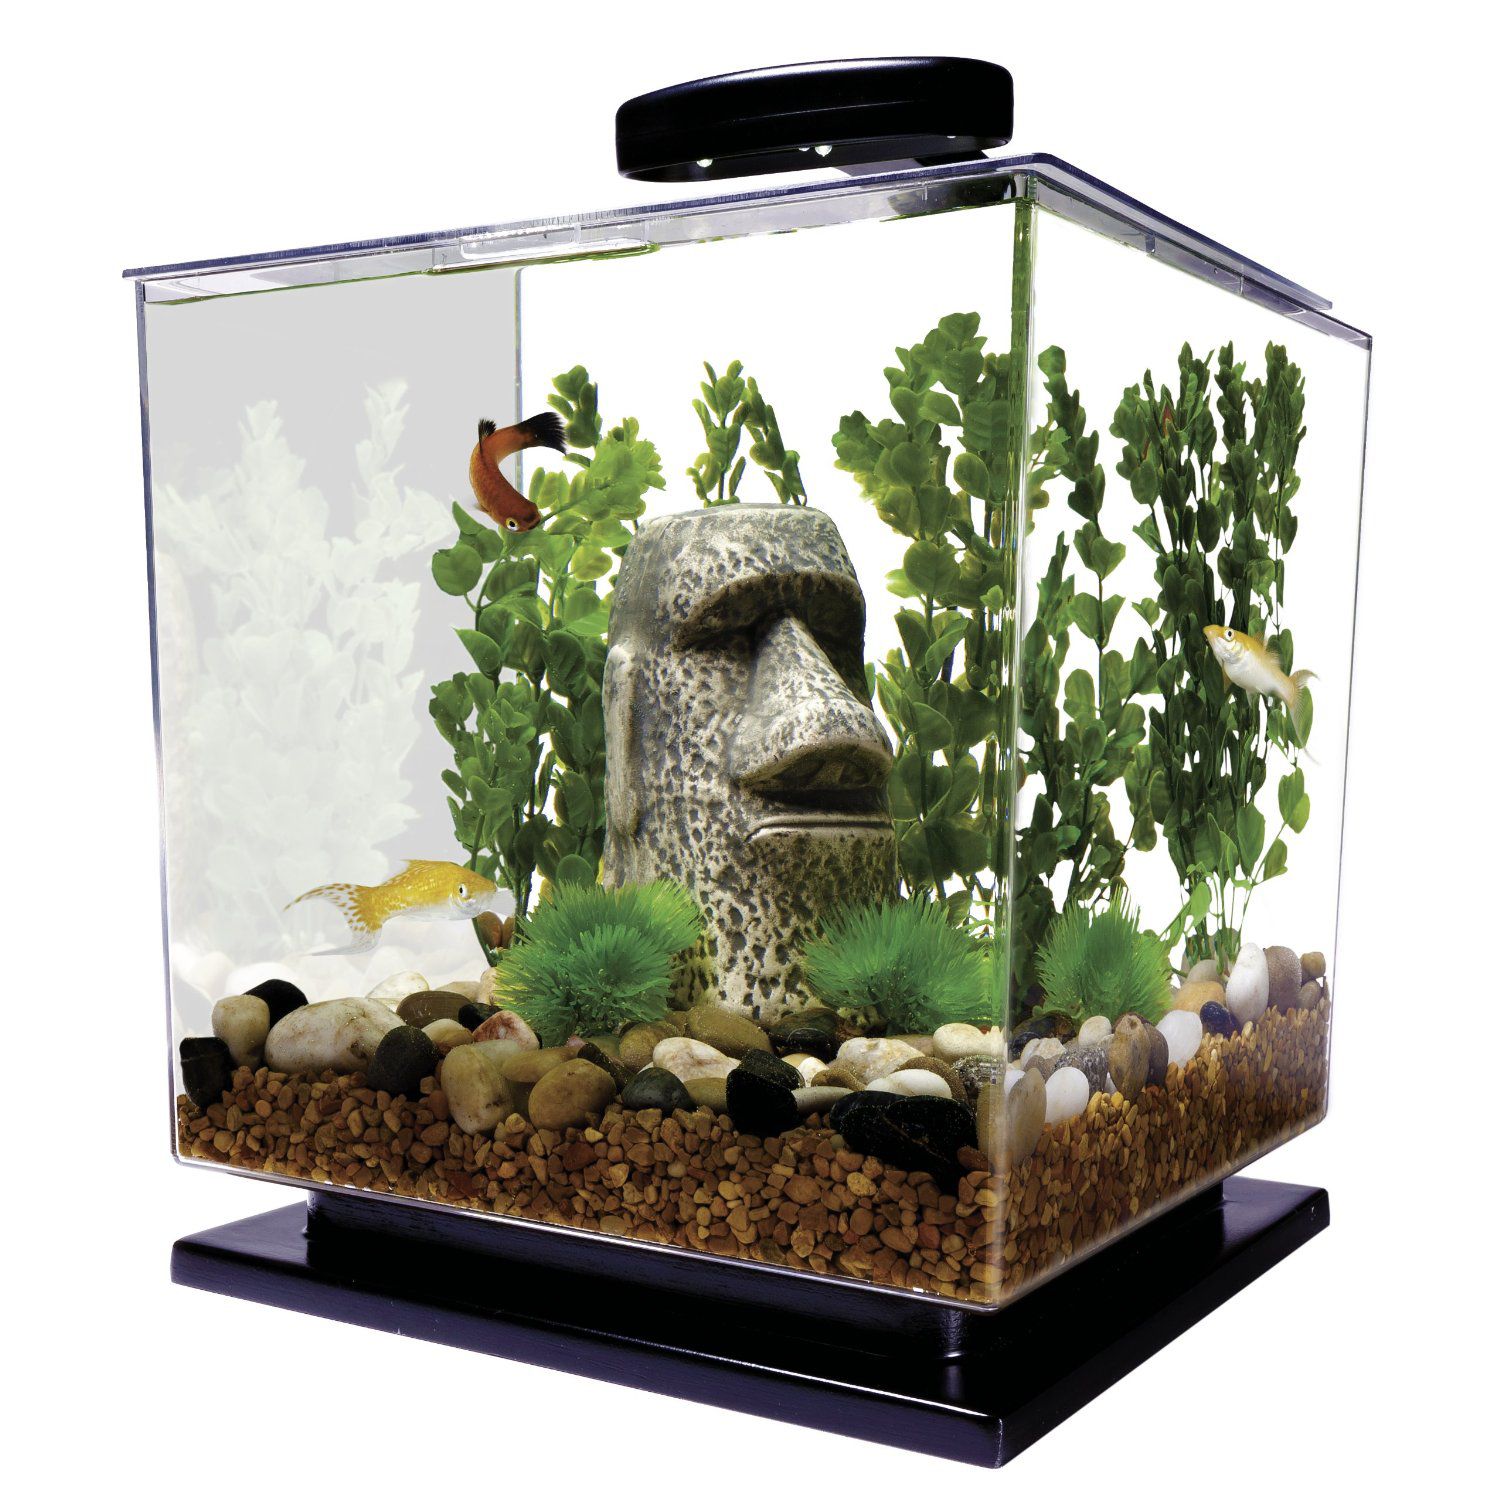 Mini Aquariums - Pros and Cons of Small Fish Tanks